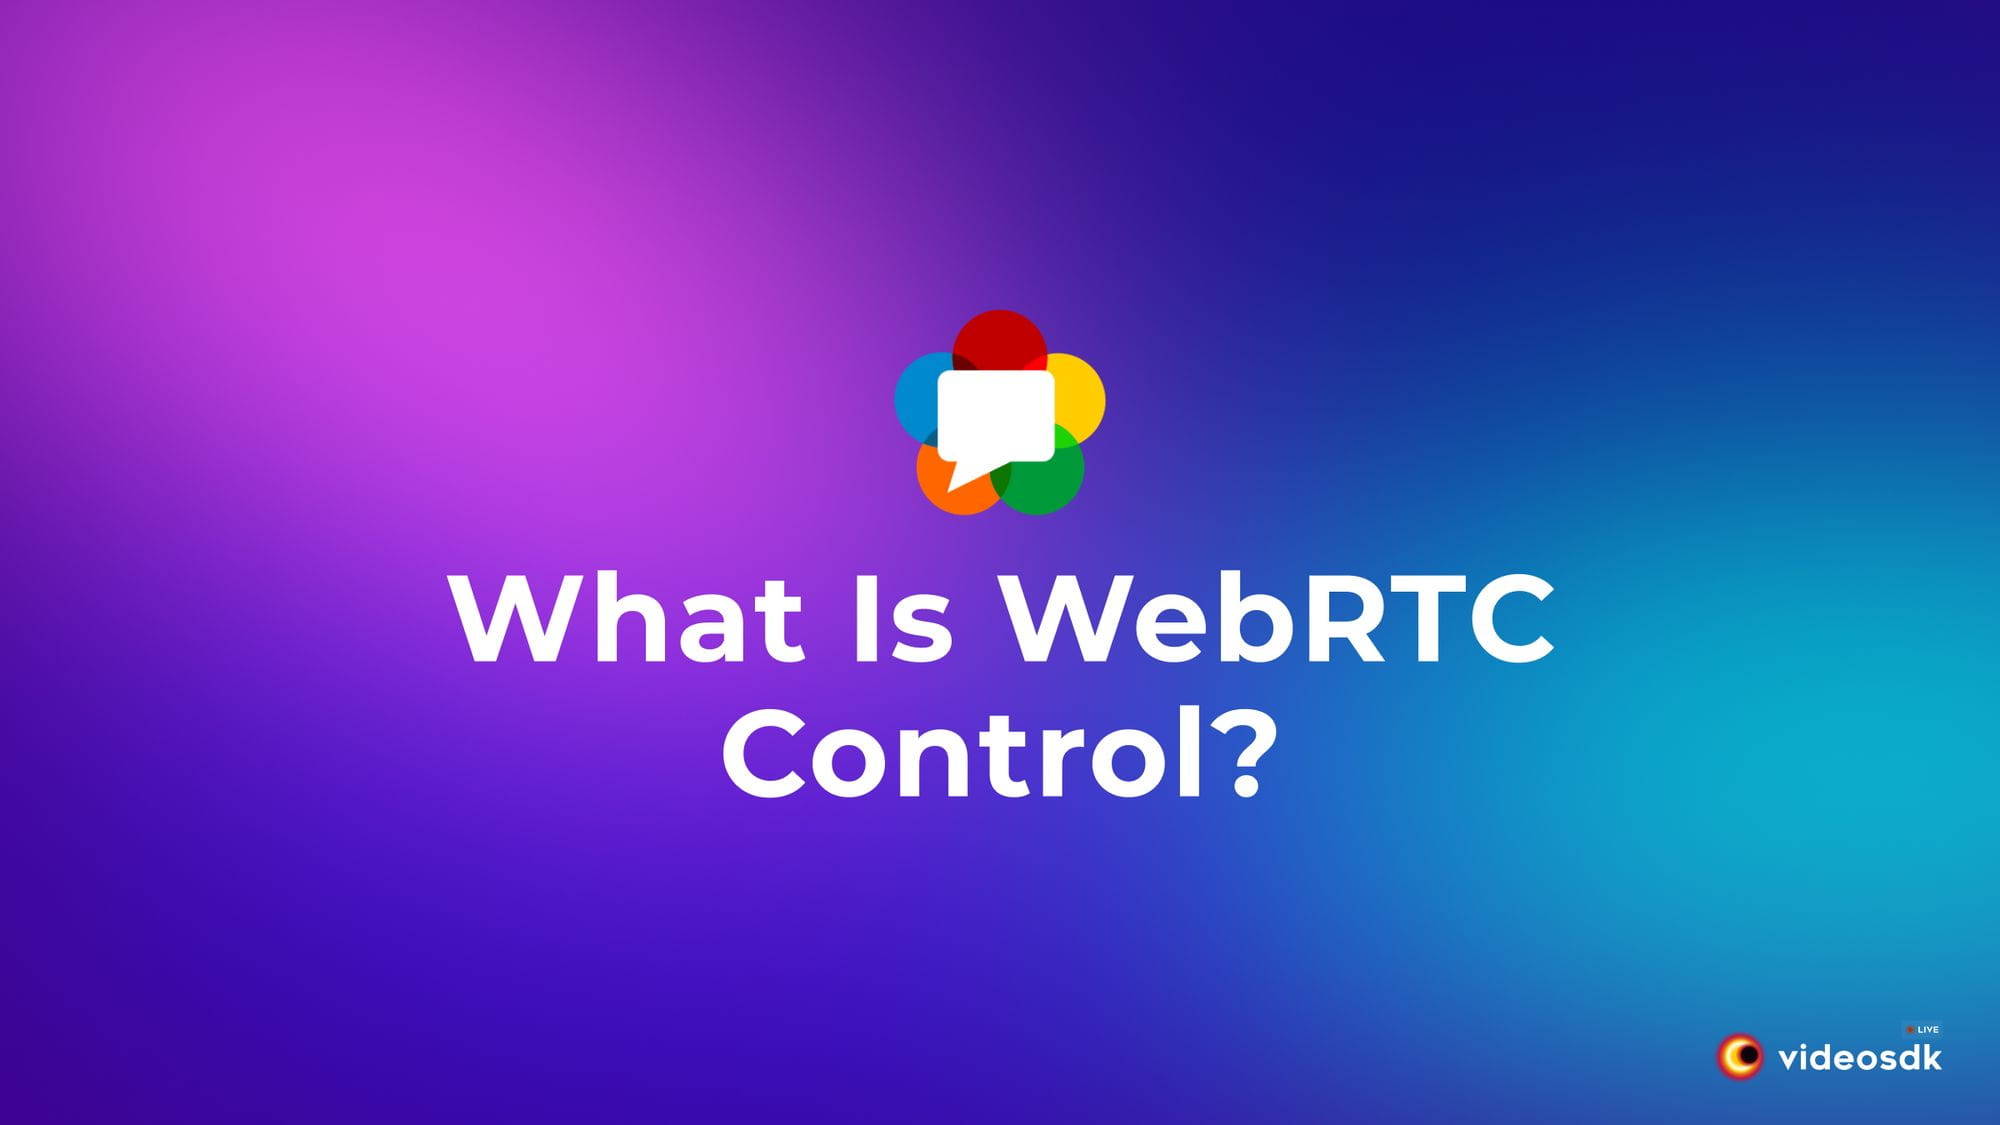 What is WebRTC Control?